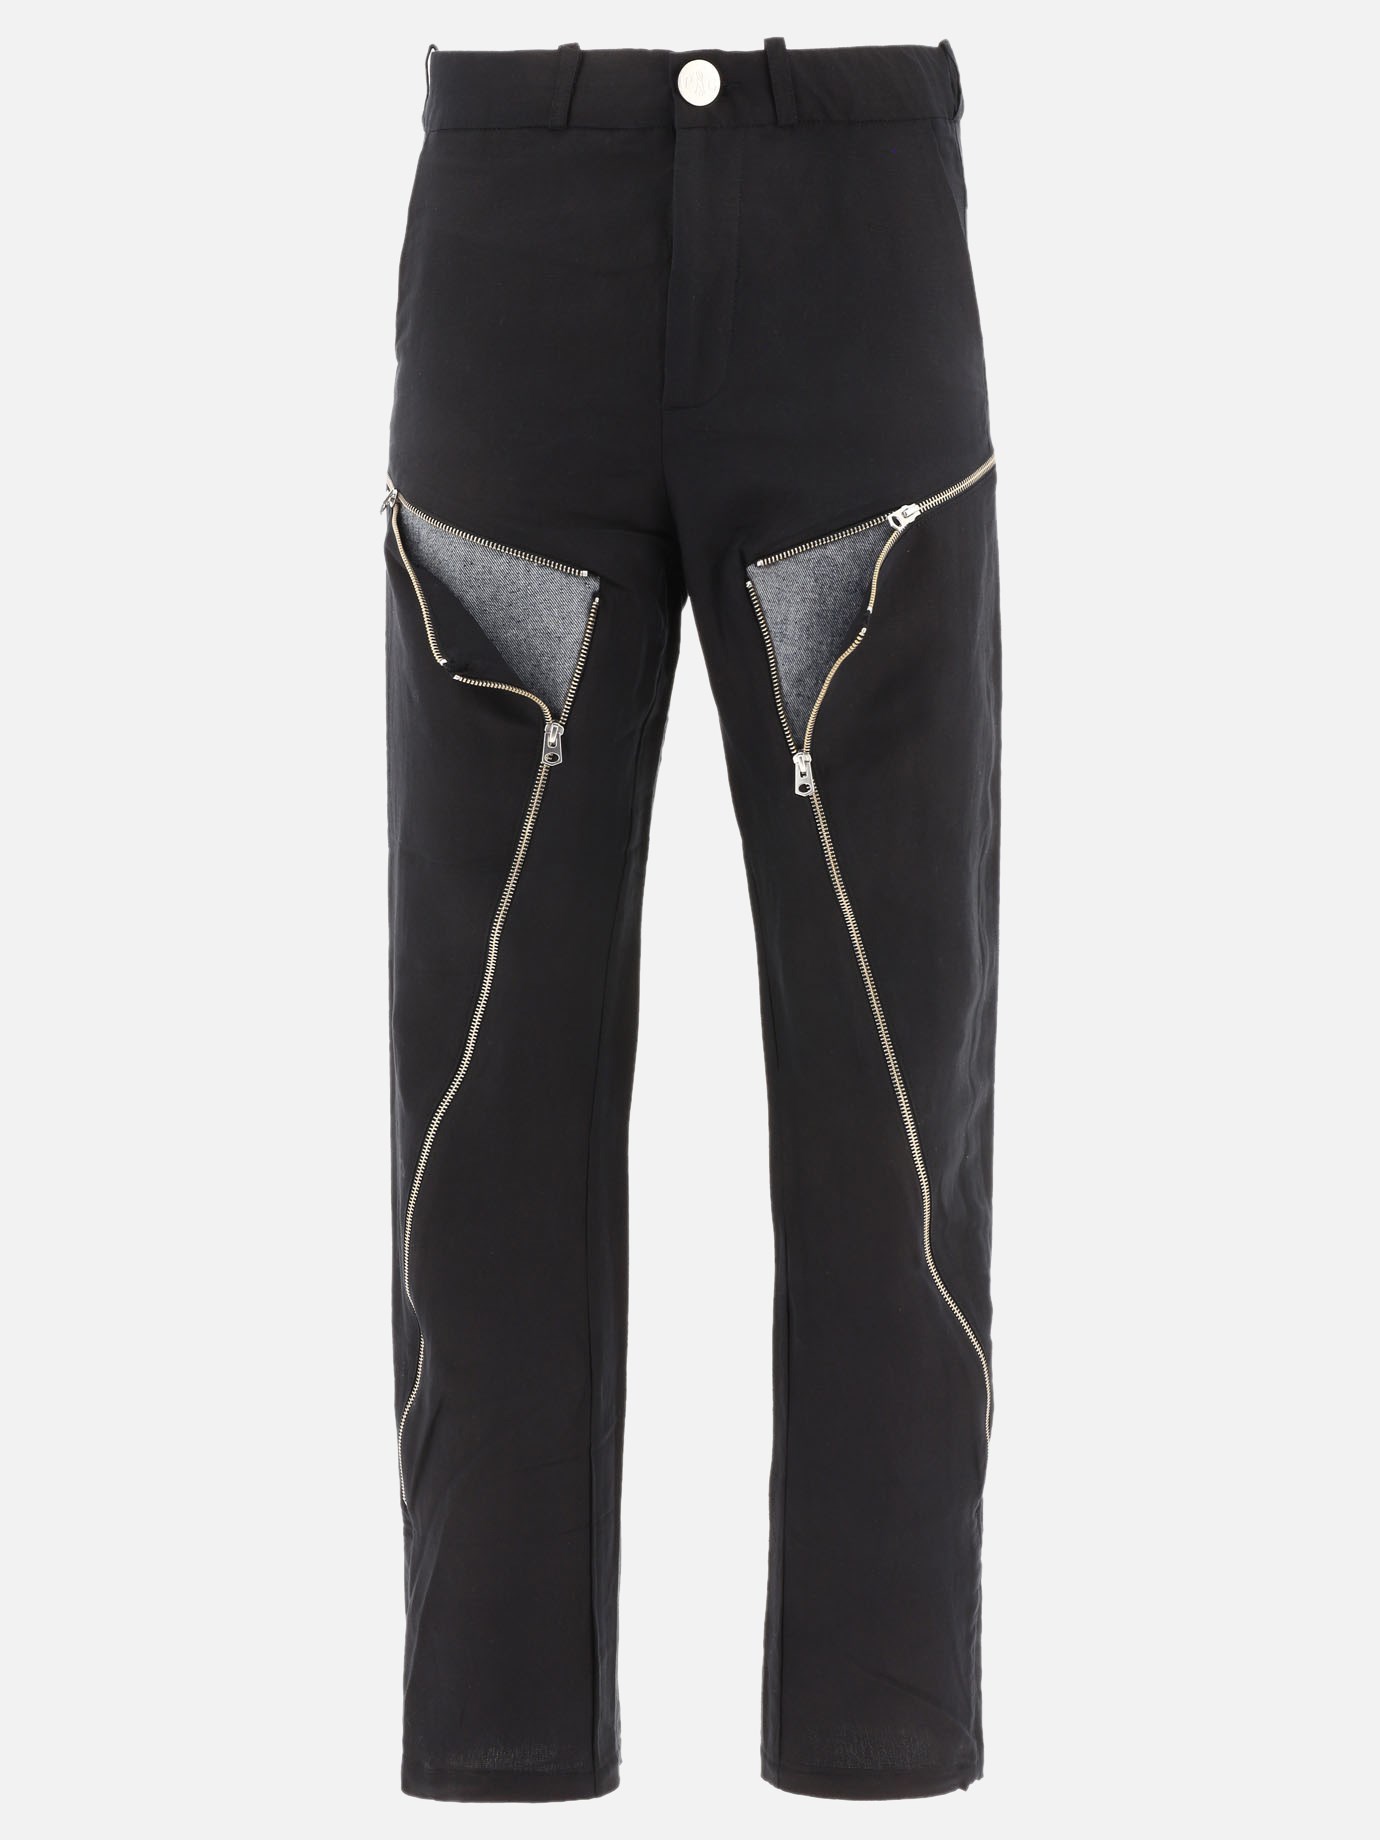 Pantaloni con zipby Per Götesson - 5